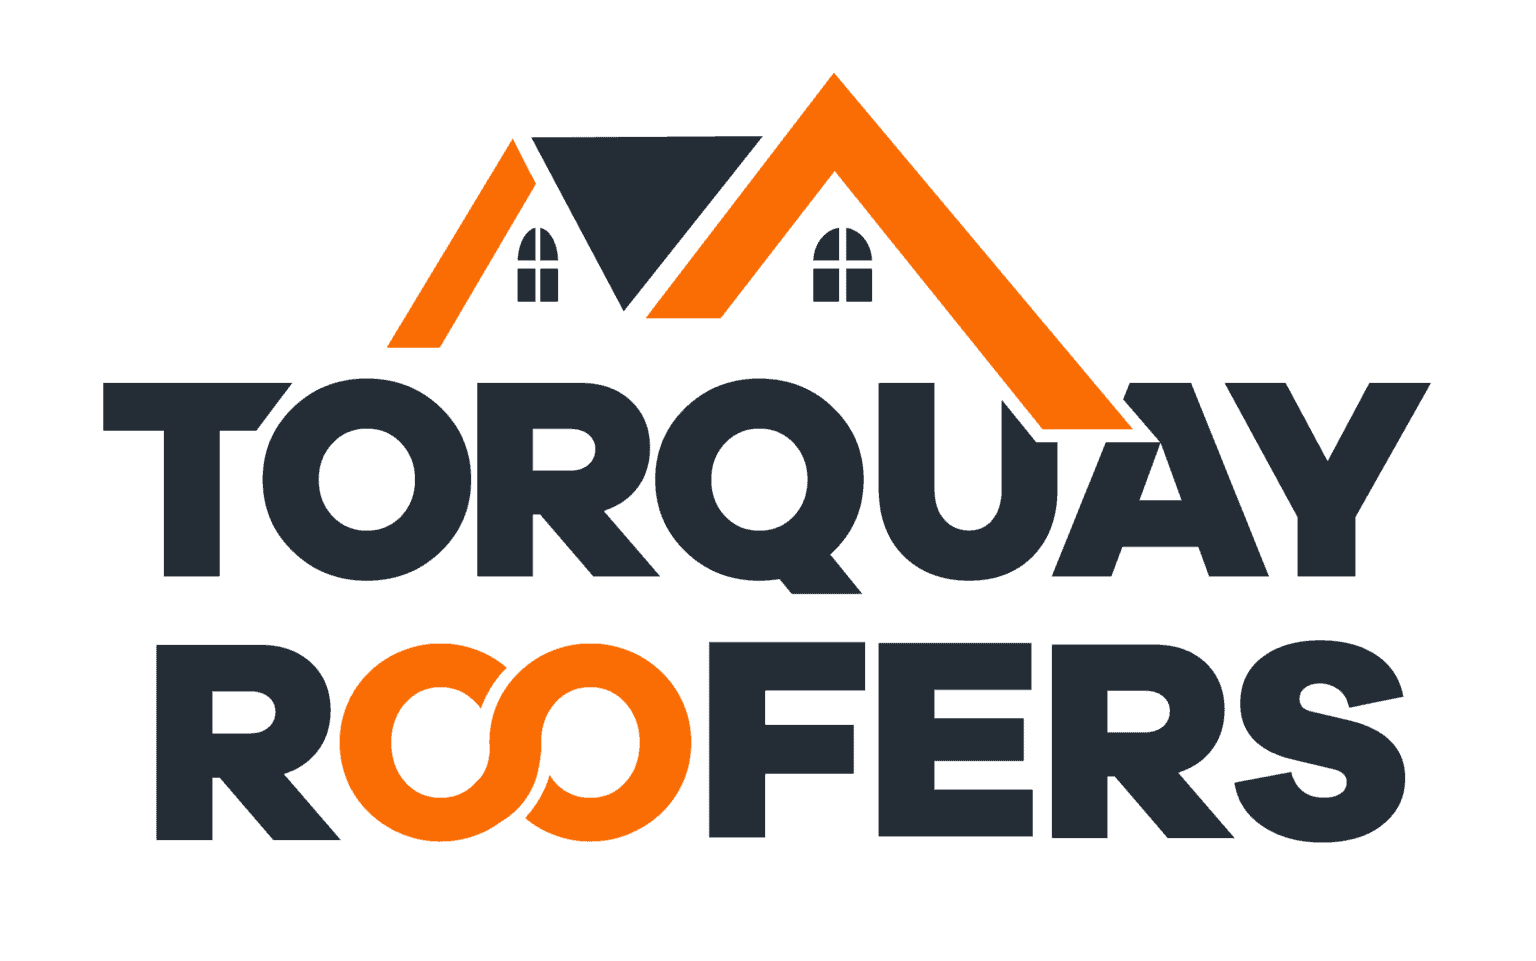 Torquay Roofers logo